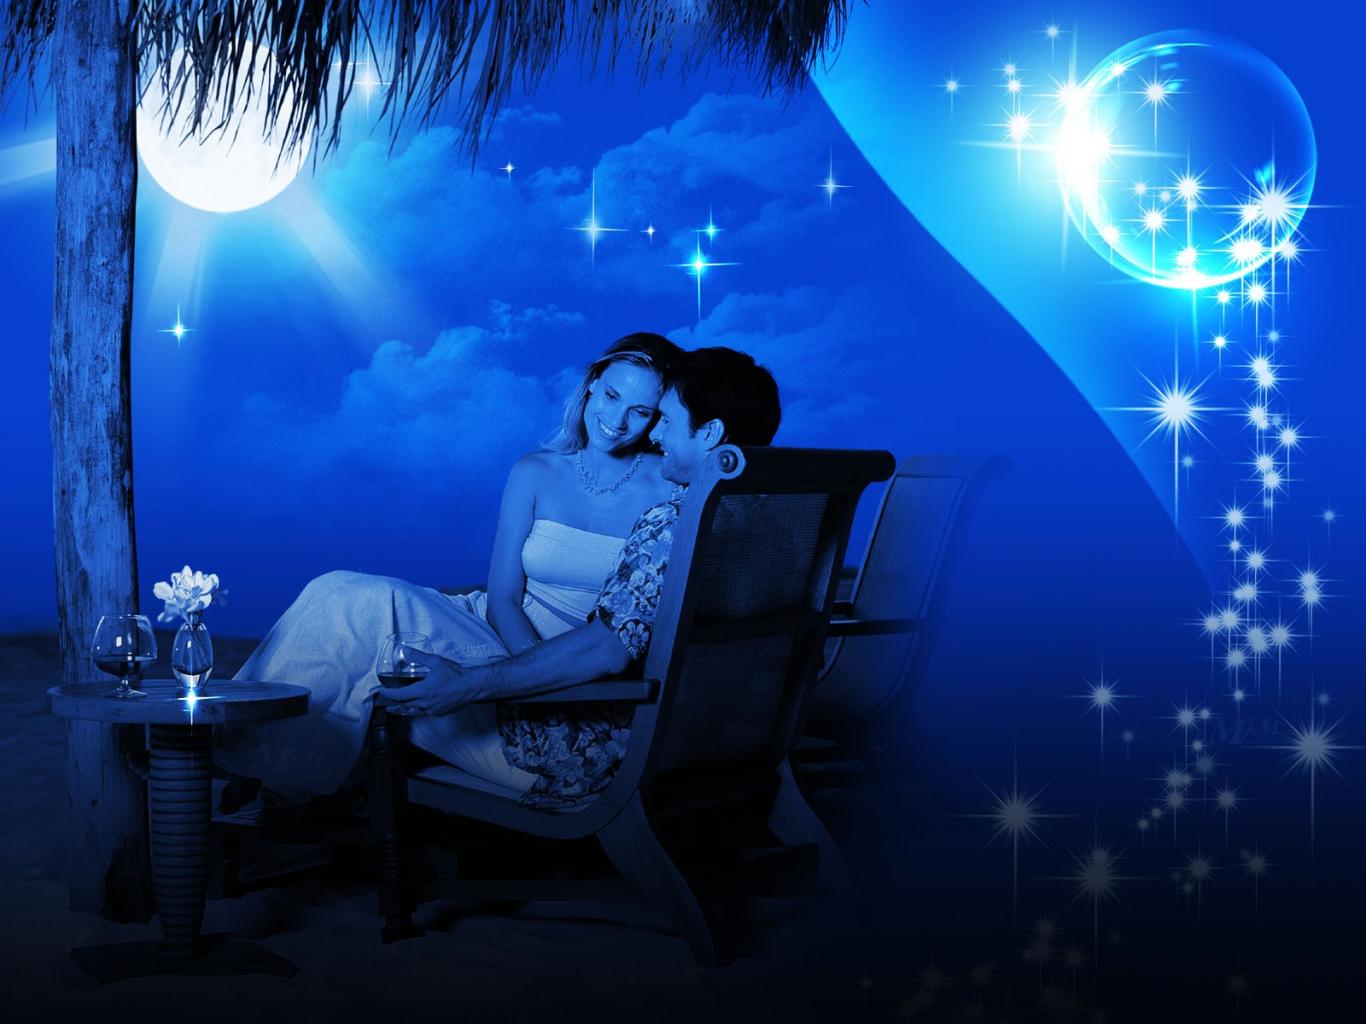 Couples In Moonlit Night - HD Wallpaper 